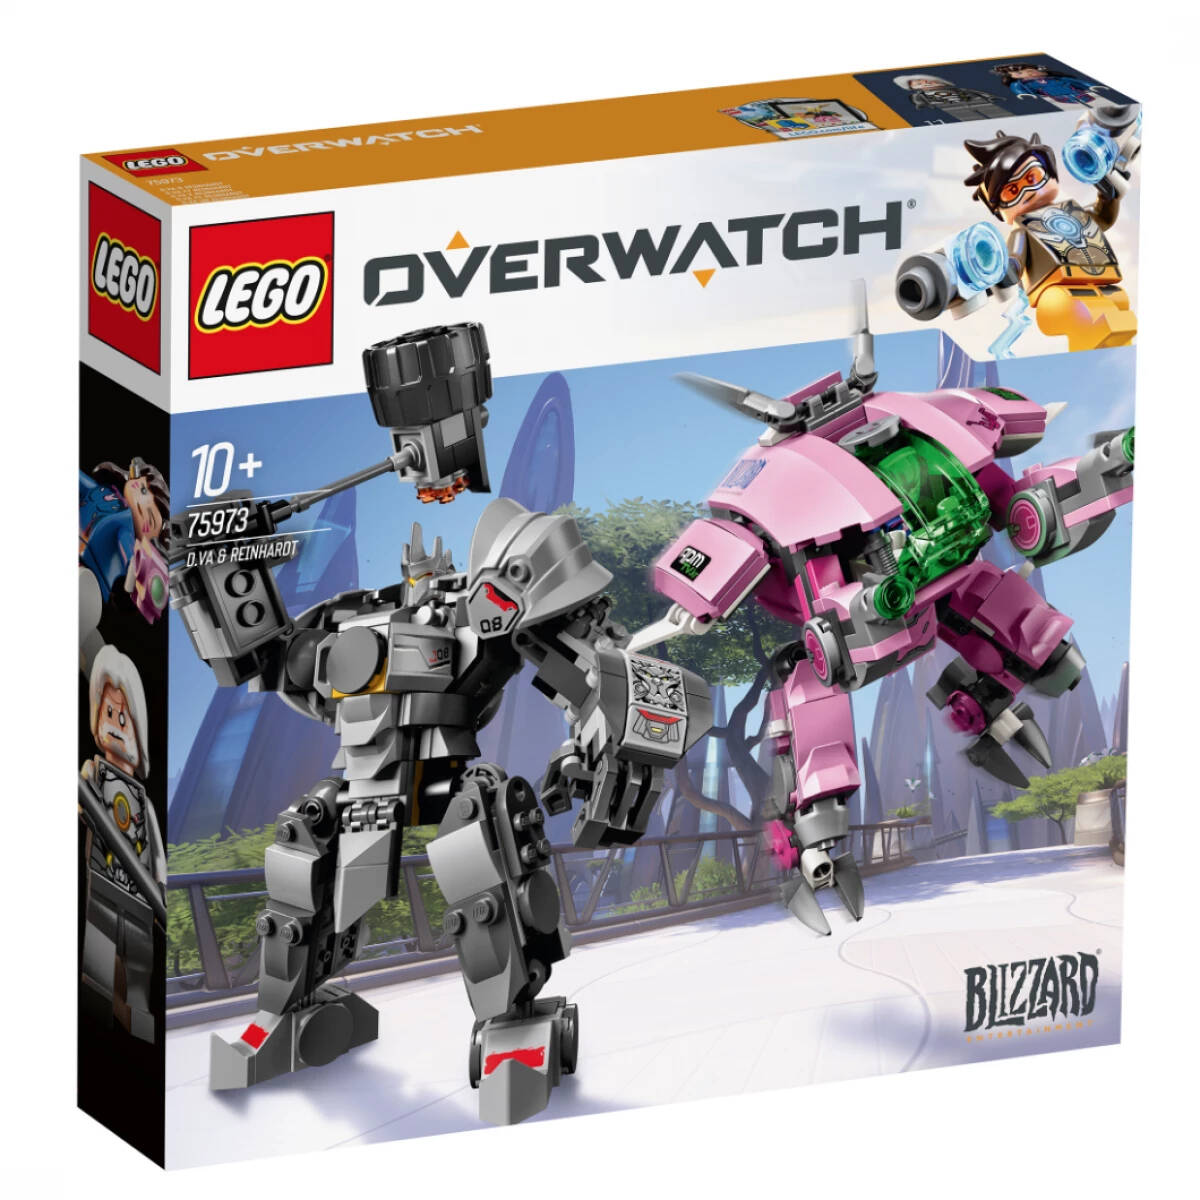 Конструктор LEGO Overwatch 75973 Д.Ва и Ренхардт, 455 дет книга прогейминг overwatch киберспорт